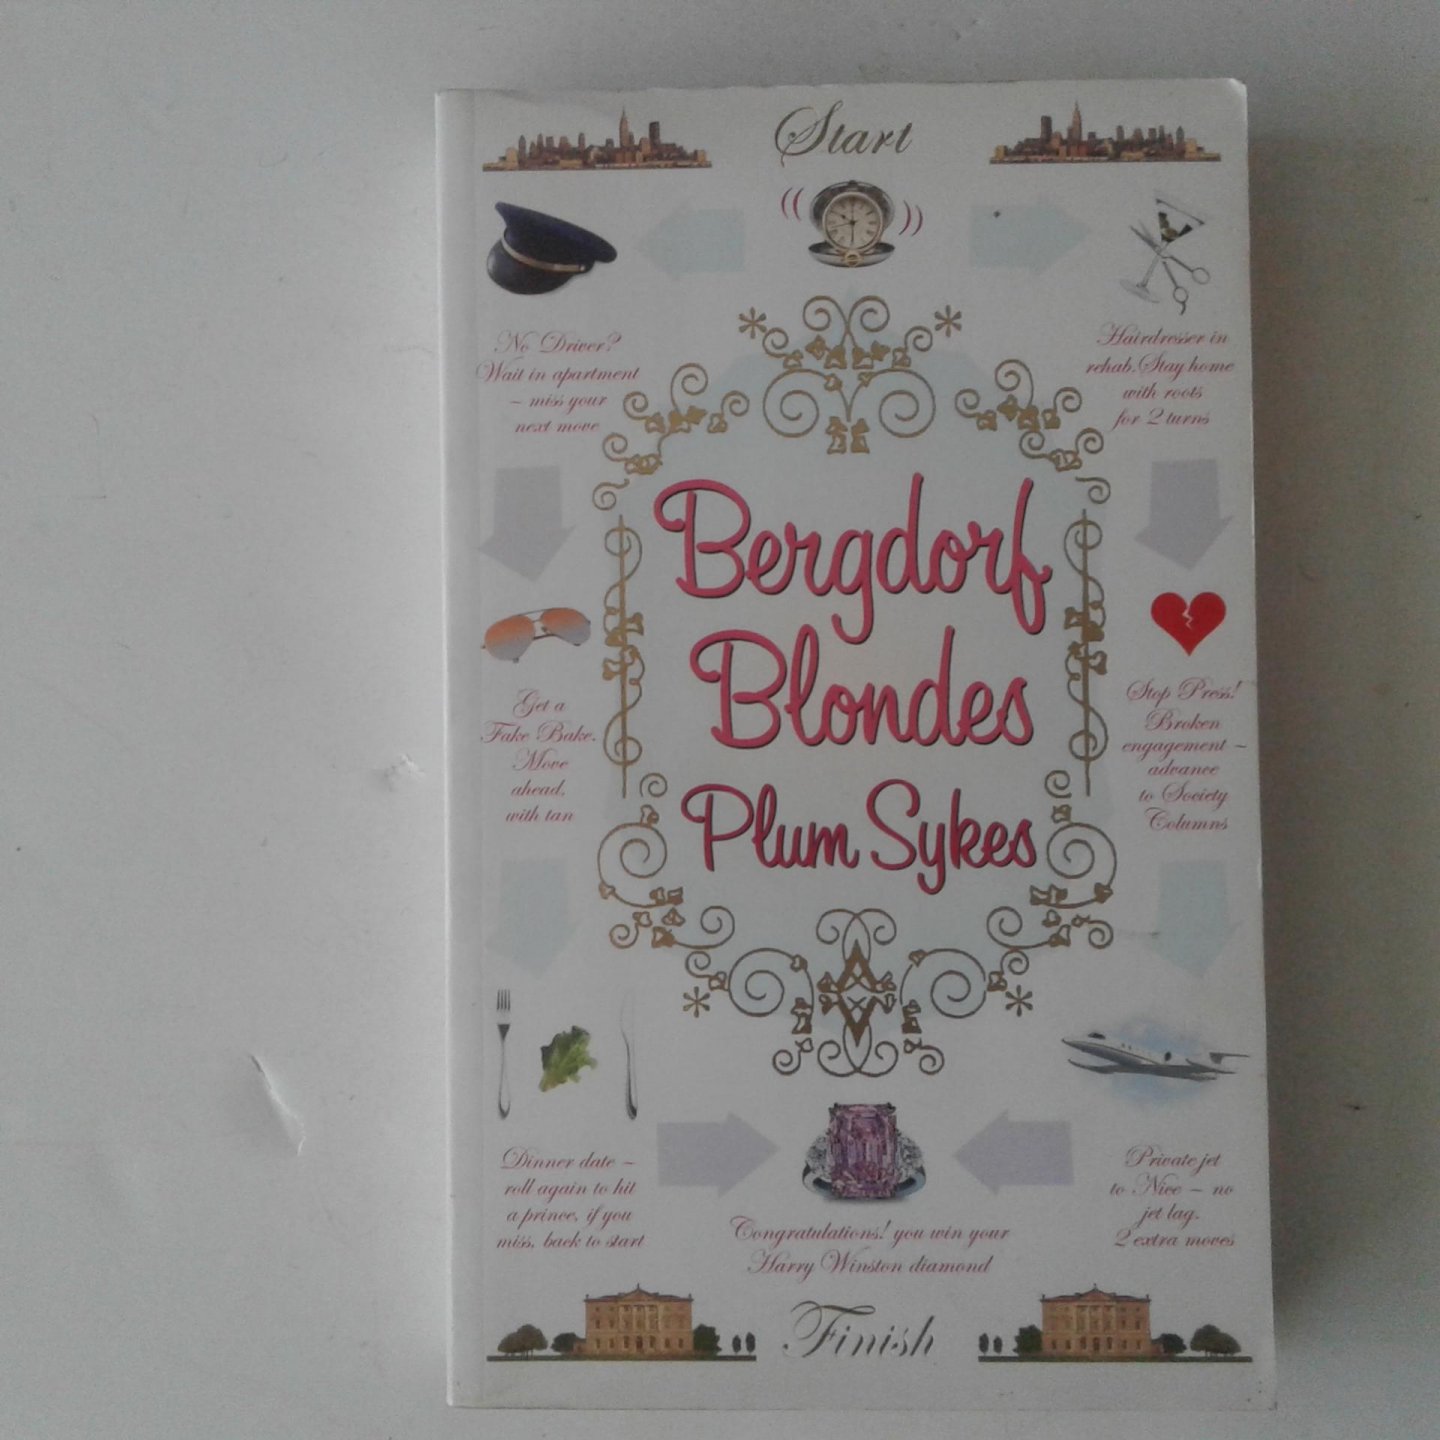 Sykes, Plum - Bergdorf Blondes